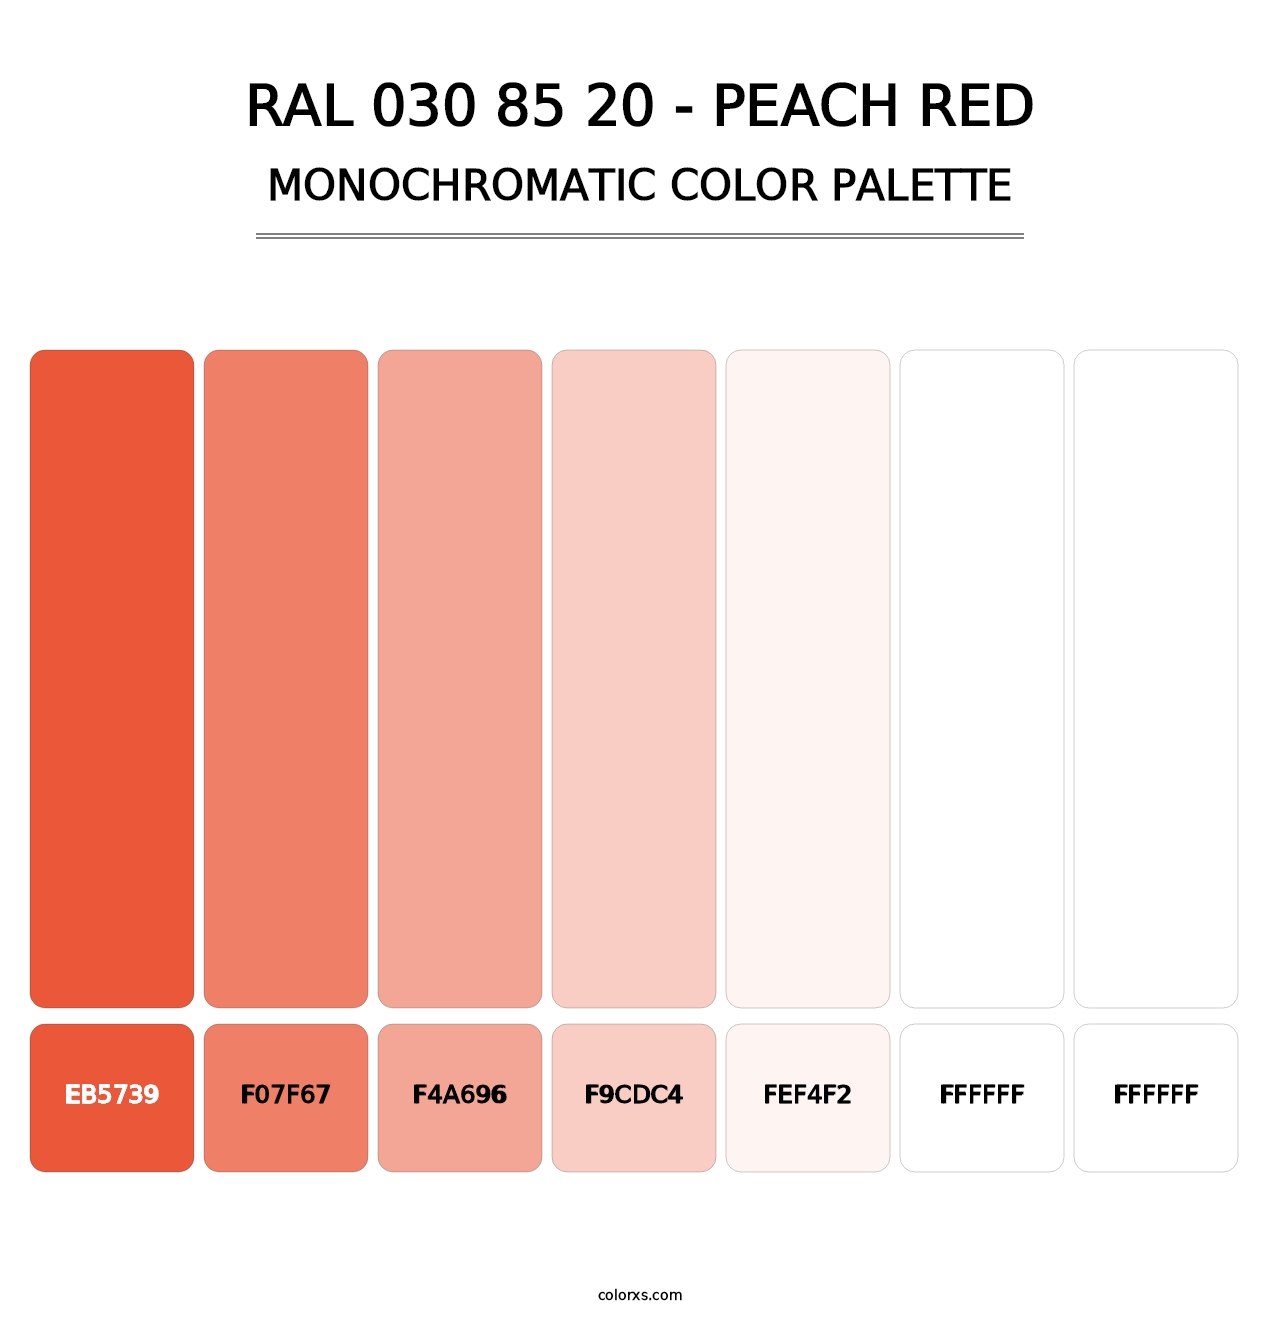 RAL 030 85 20 - Peach Red - Monochromatic Color Palette